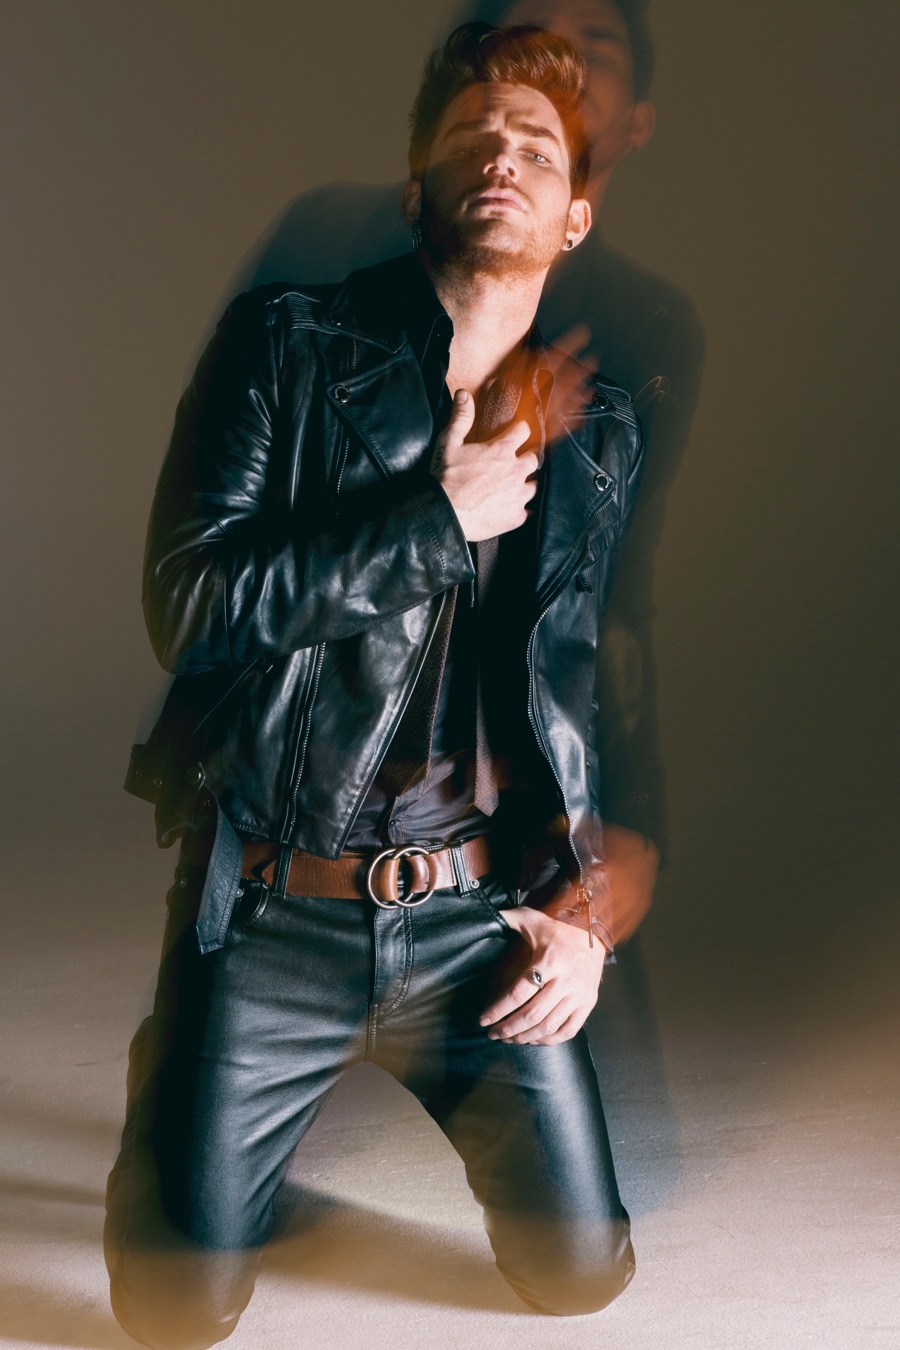 Adam Lambert Rocks Leather for 'The Original High' Album Art Photo Shoot